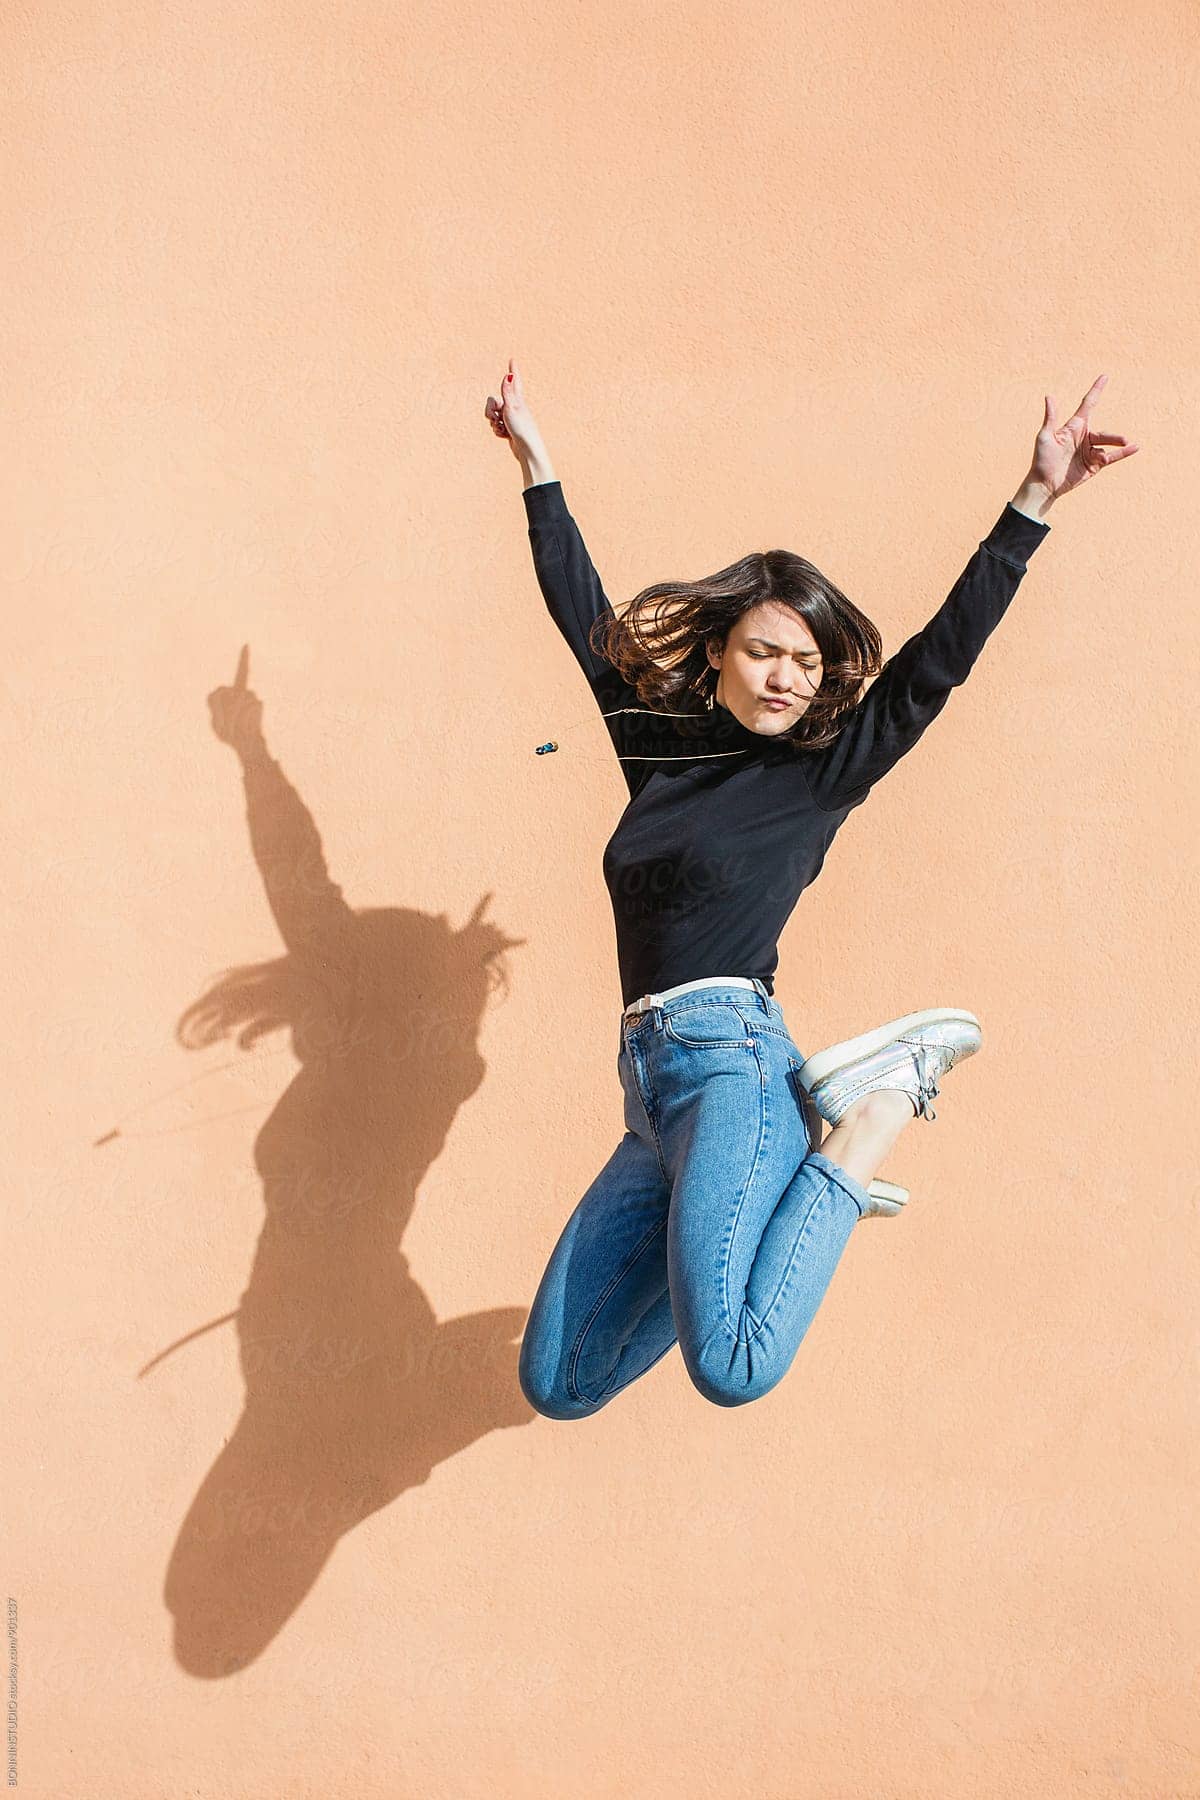 Best Model Poses Female Female Photoshoot Poses for Girls Jumping